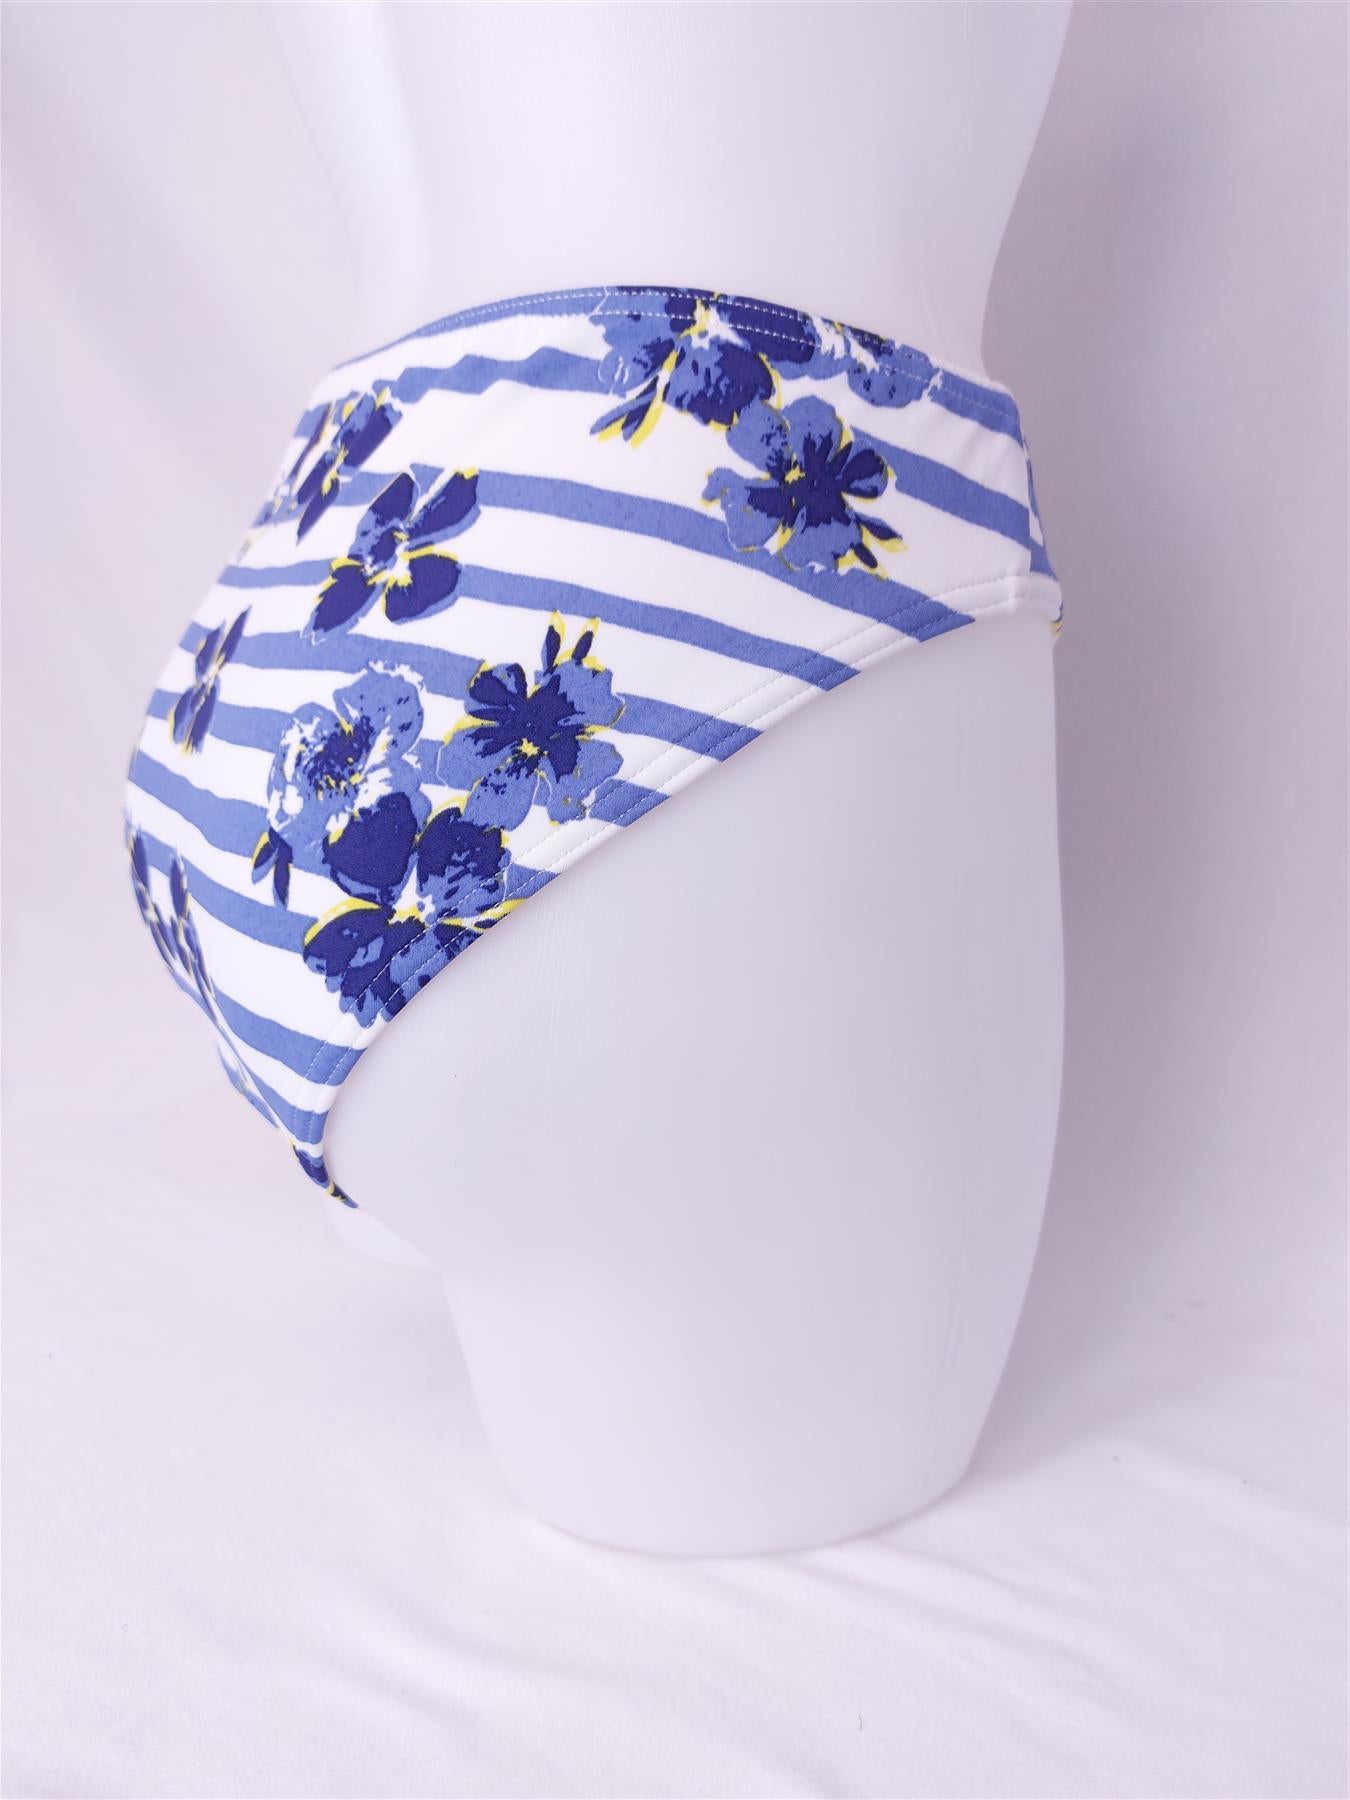 Floral Stripe Bikini Briefs (Bottoms Only)